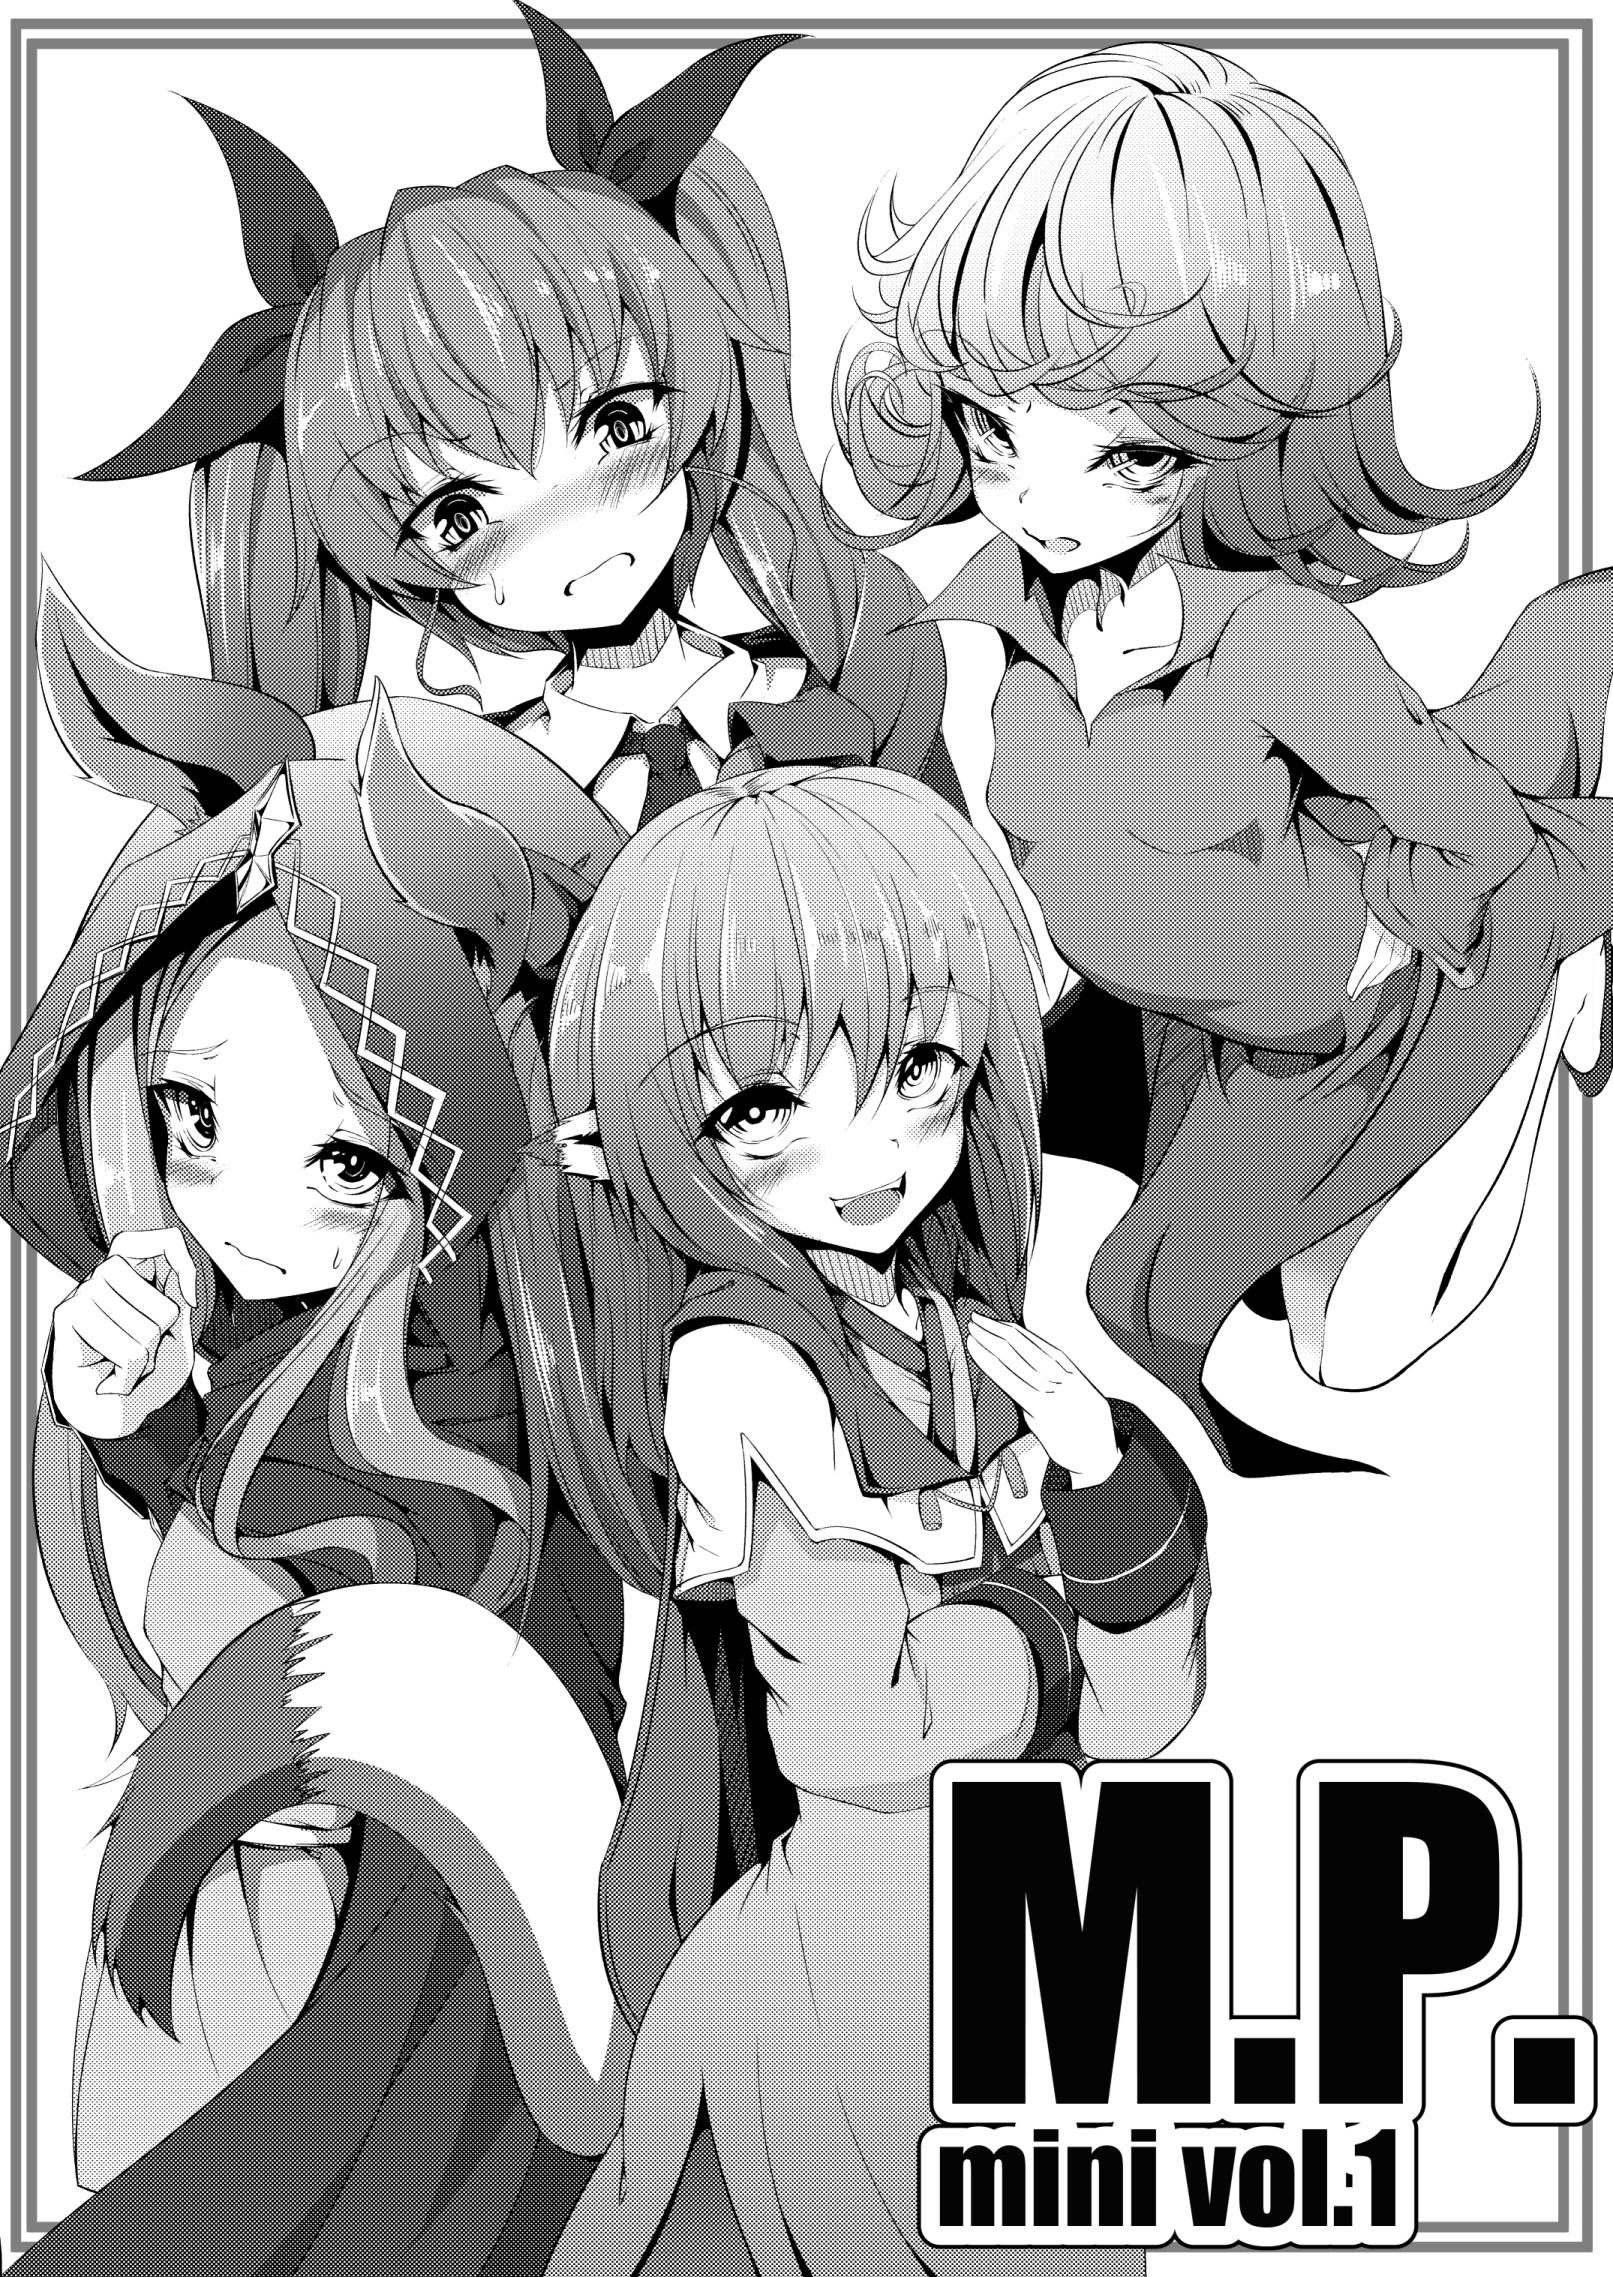 M.P.mini vol.1 1